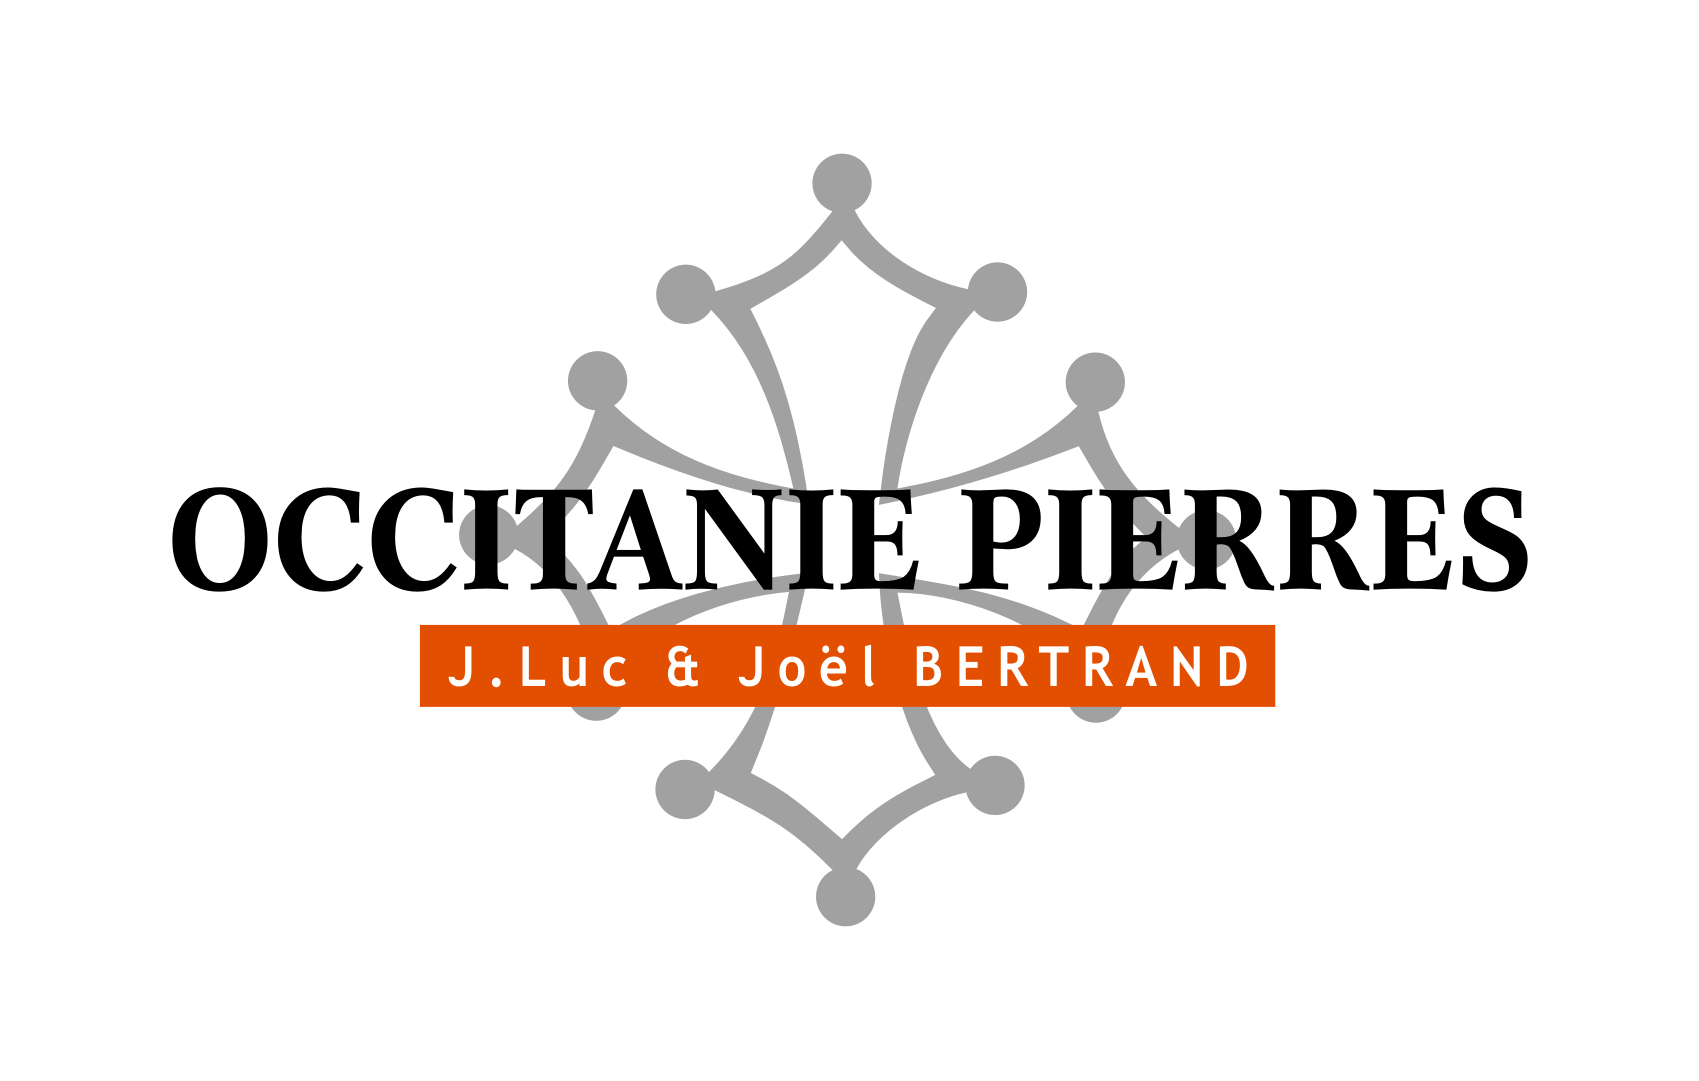 OCCITANIE PIERRES logo